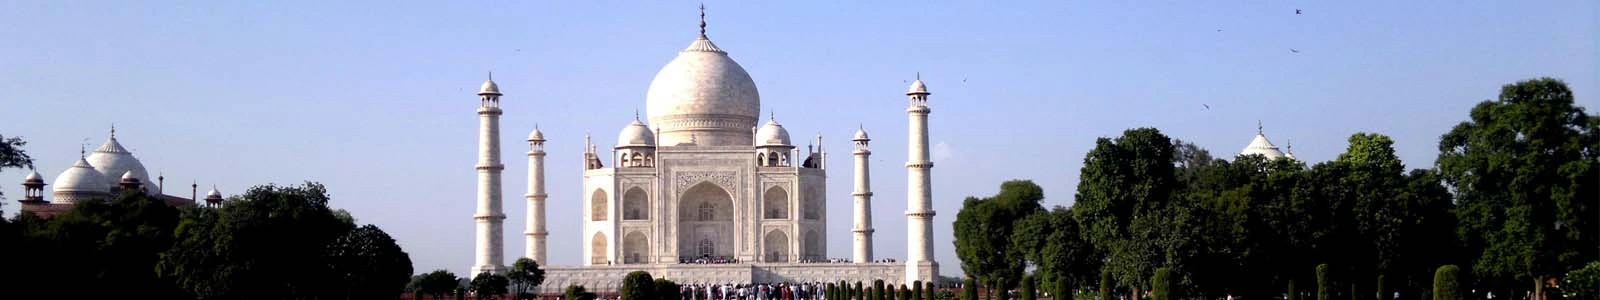 Same Day Private Taj Mahal & Agra Tour From New Delhi by Car